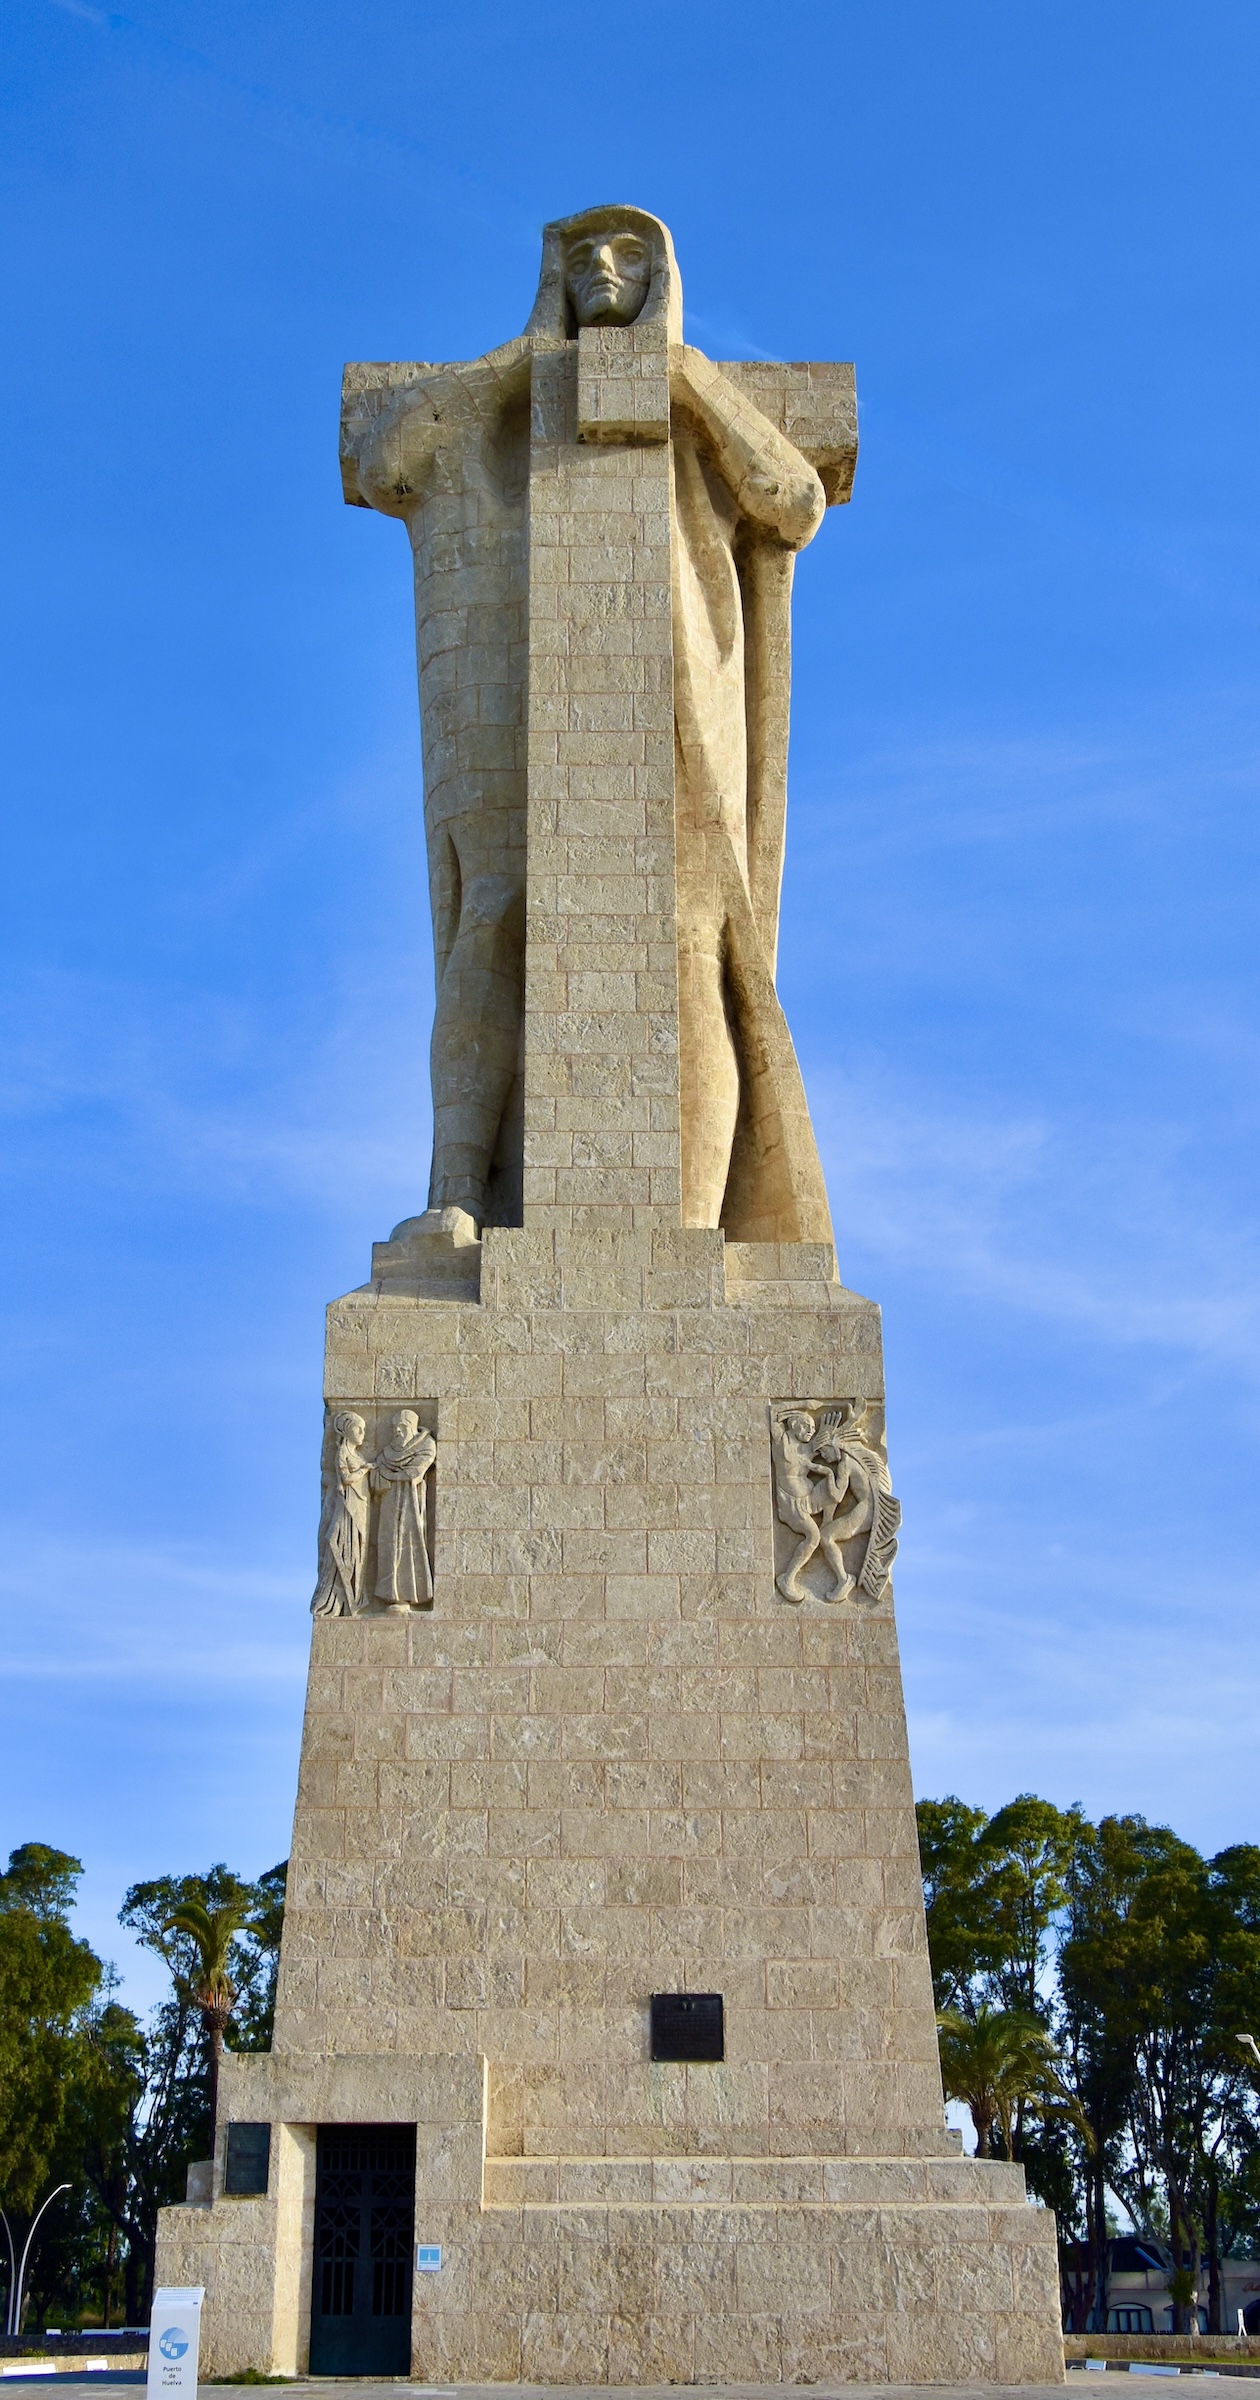 Columbus Monument near La Rabida